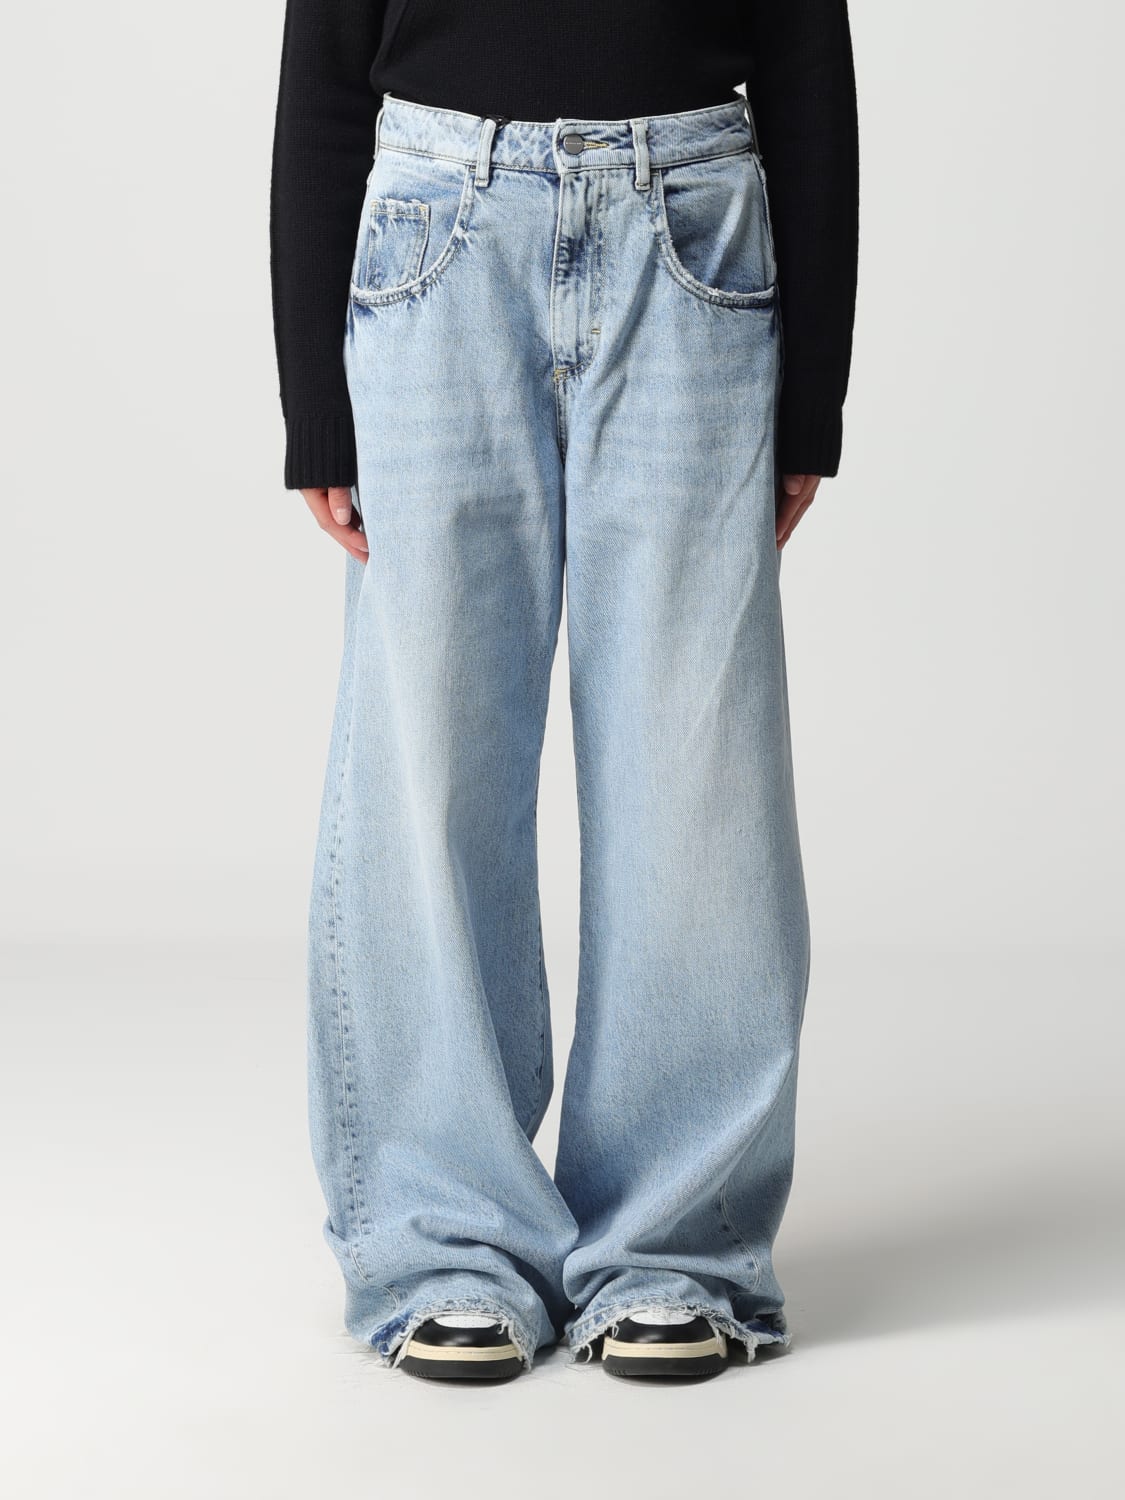 ICON DENIM LOS ANGELES: jeans for woman - Gnawed Blue | Icon Denim Los ...